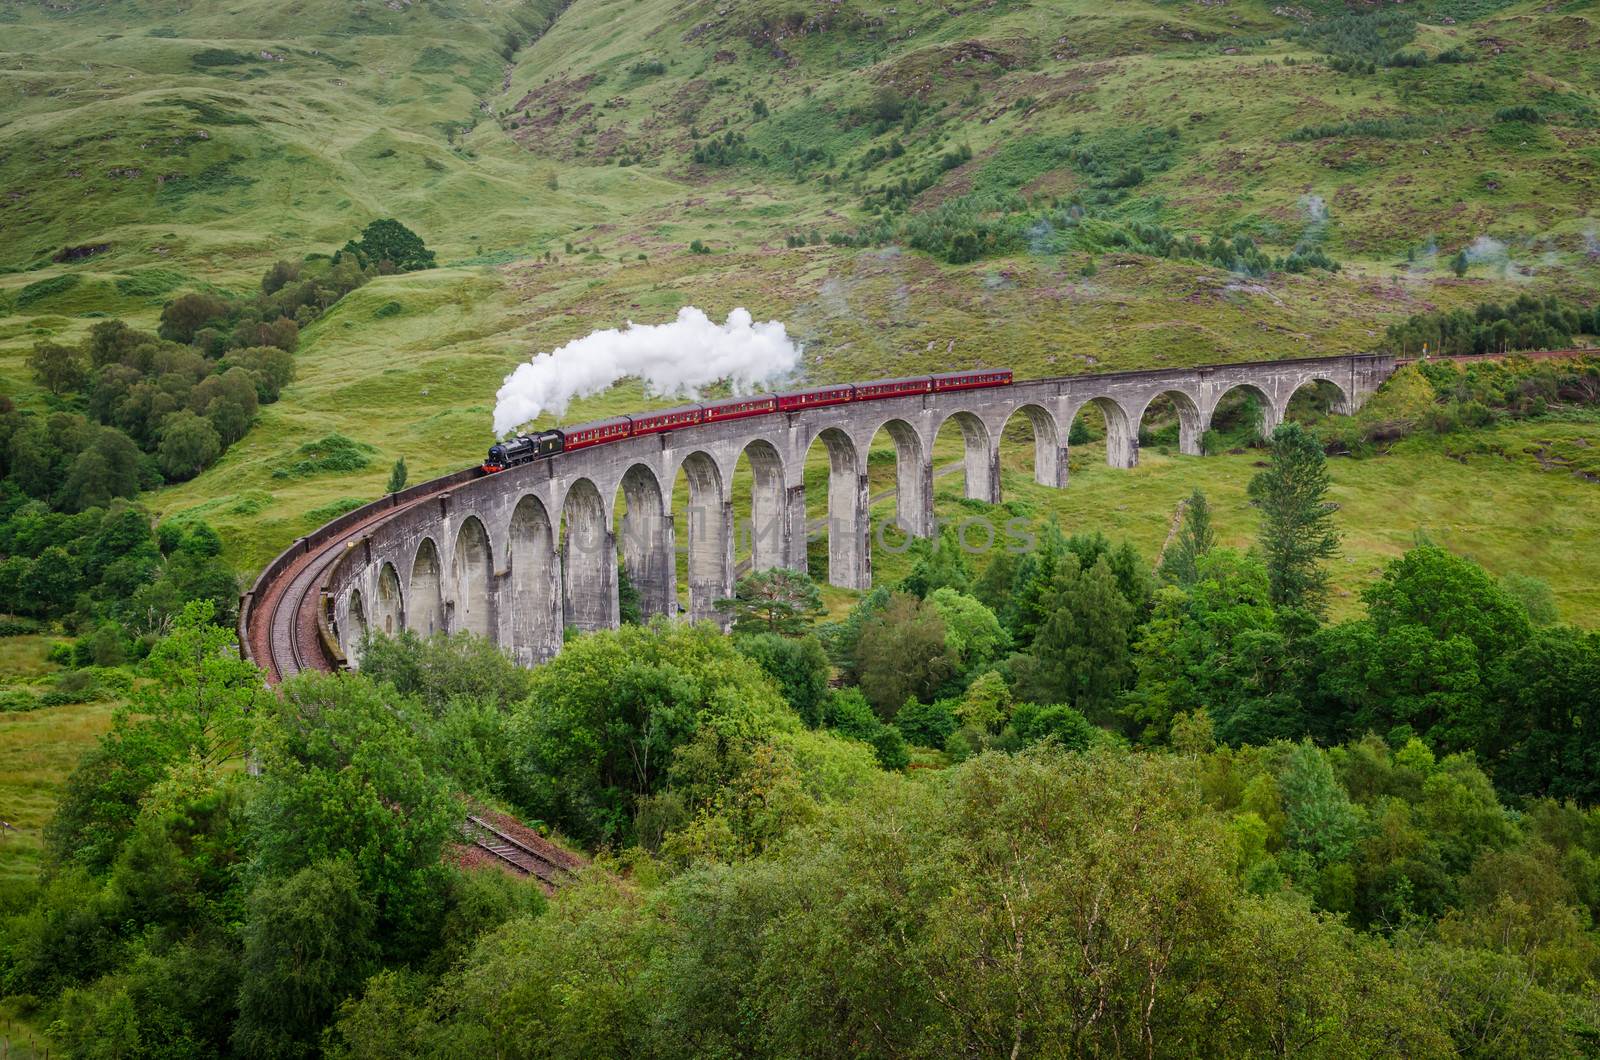 View of a steam train on a famous Glenfinnan viaduct, Scotland